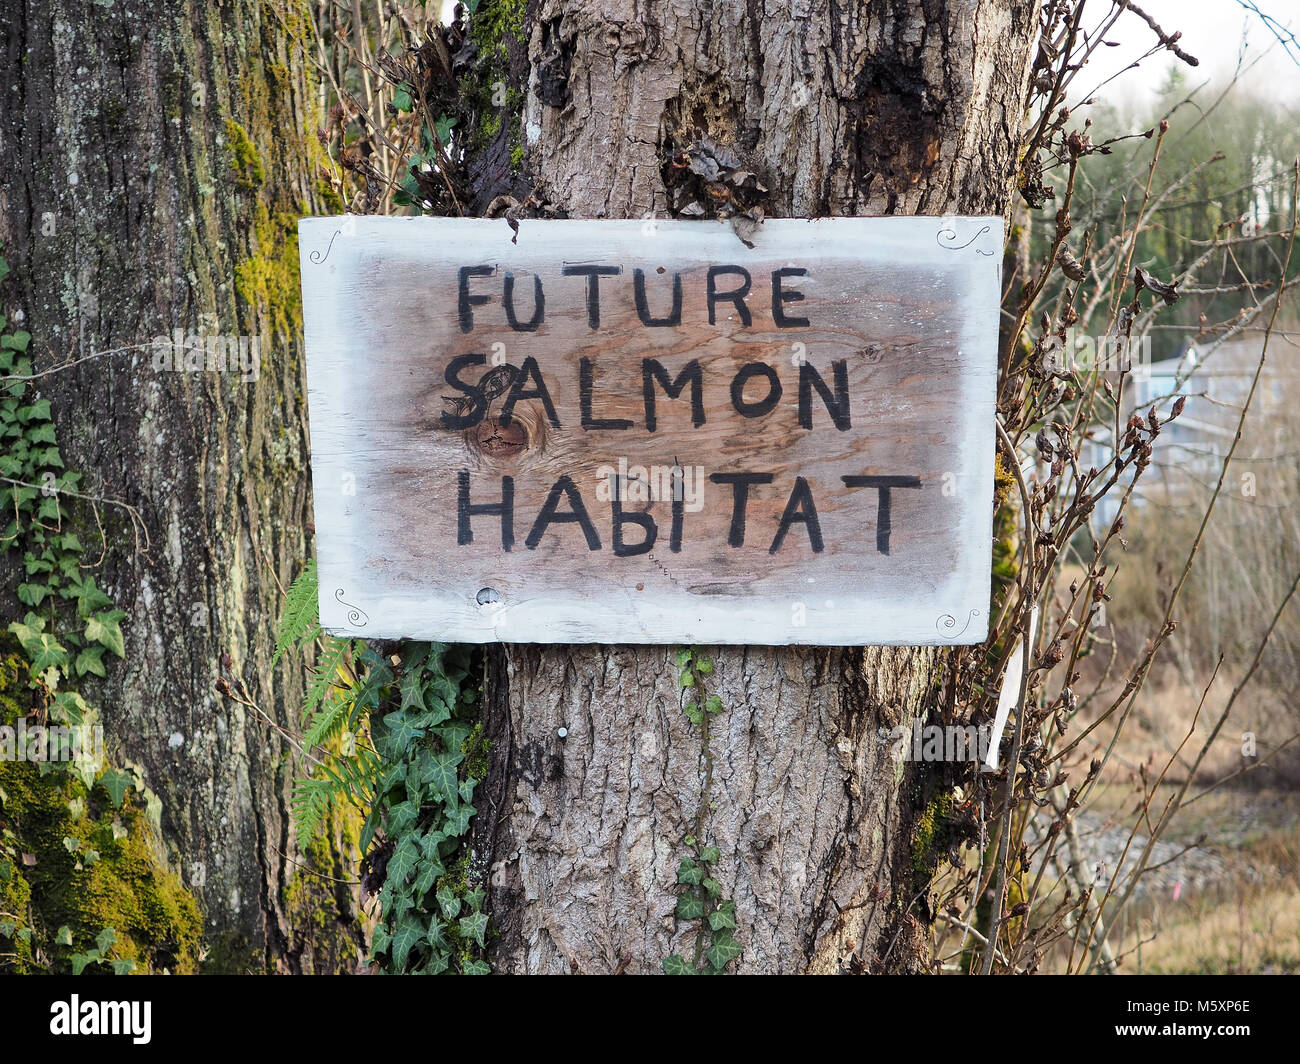 'Future salmon habitat' hand-made sign in Bothell, WA park Stock Photo